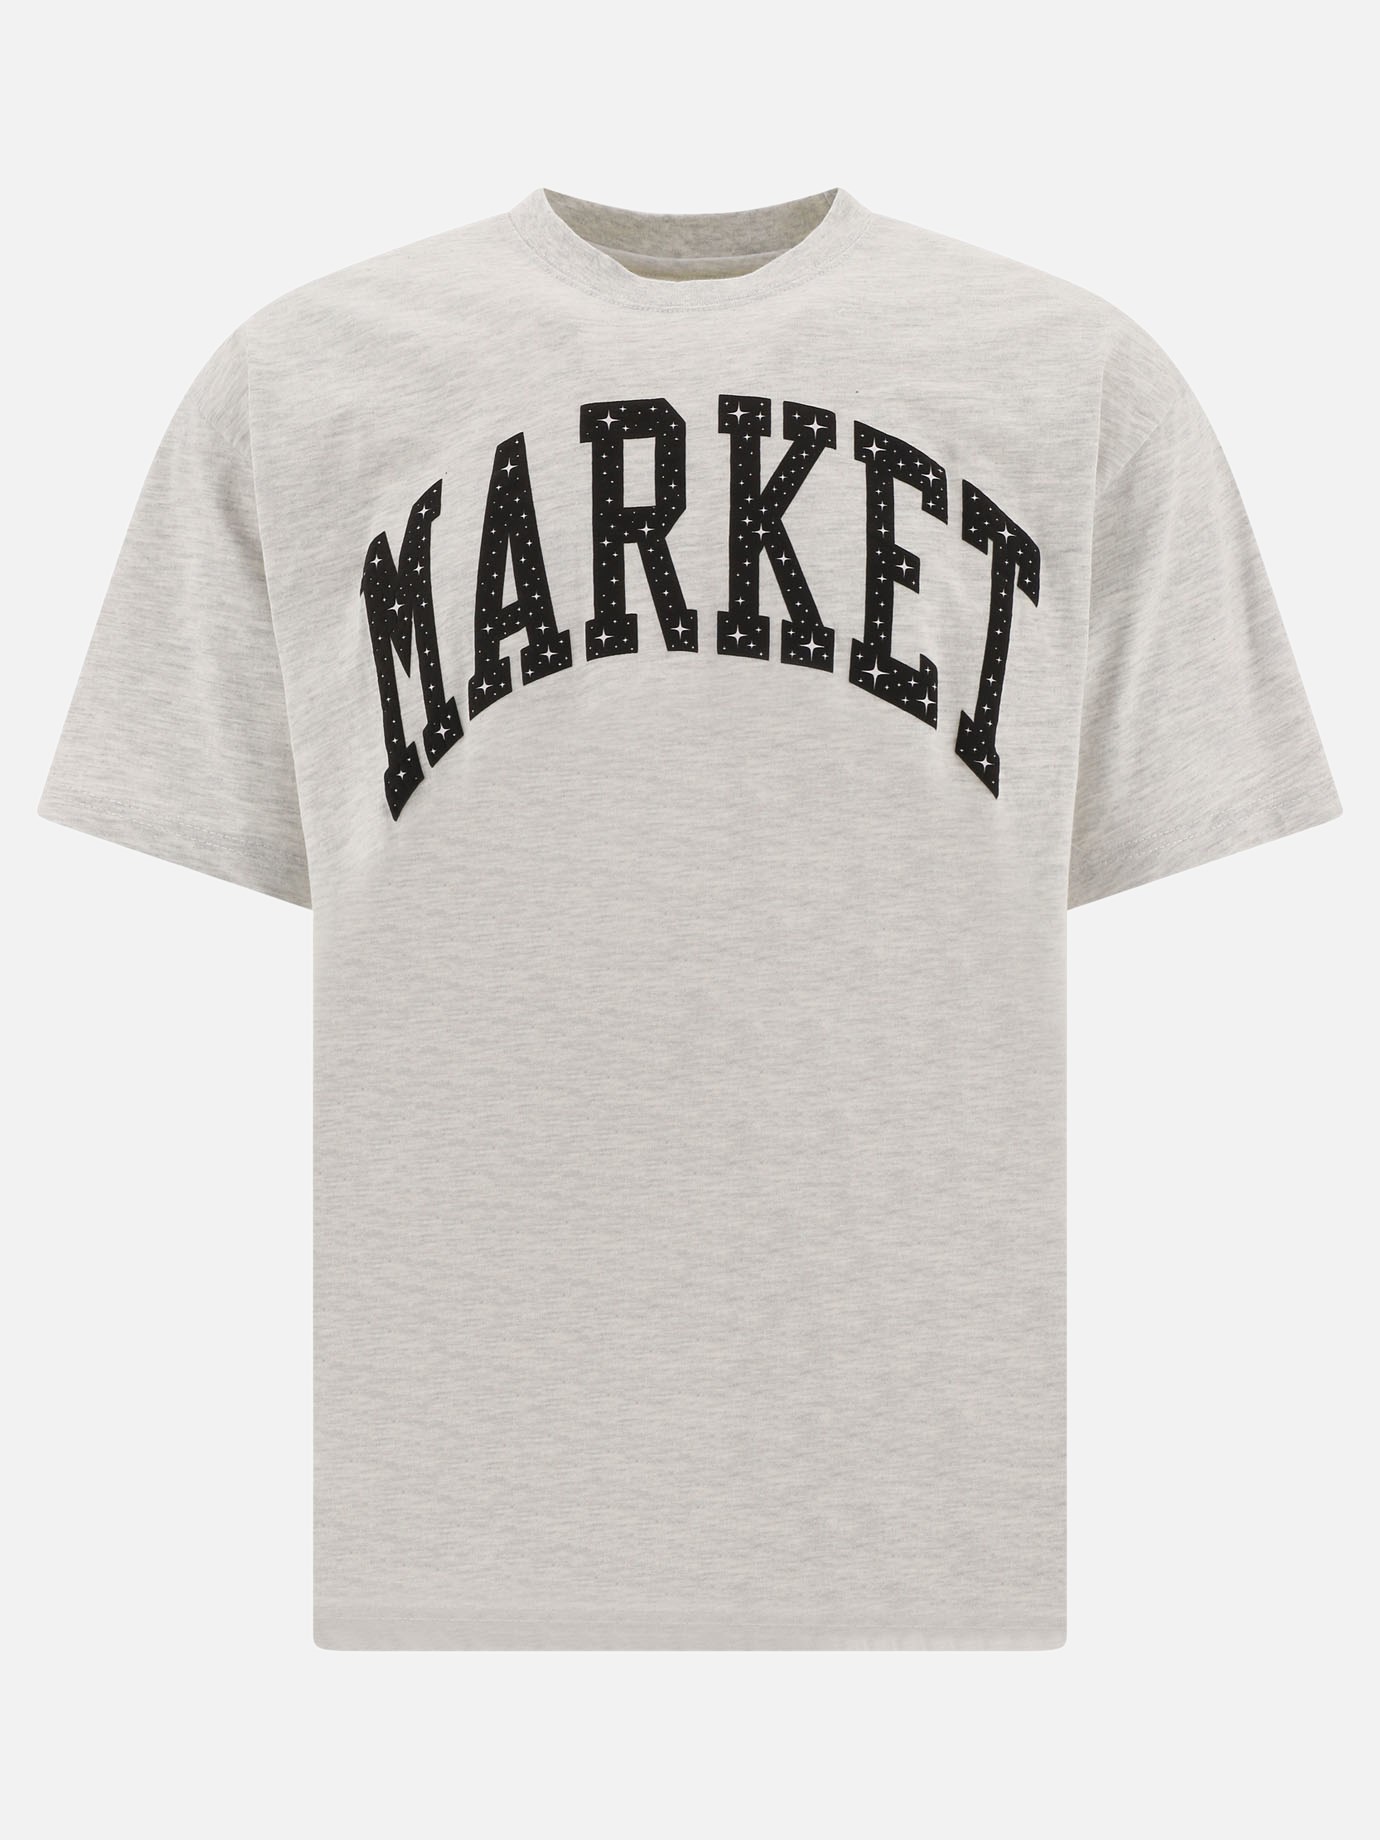 T-shirt  Market Arc by Market - 1